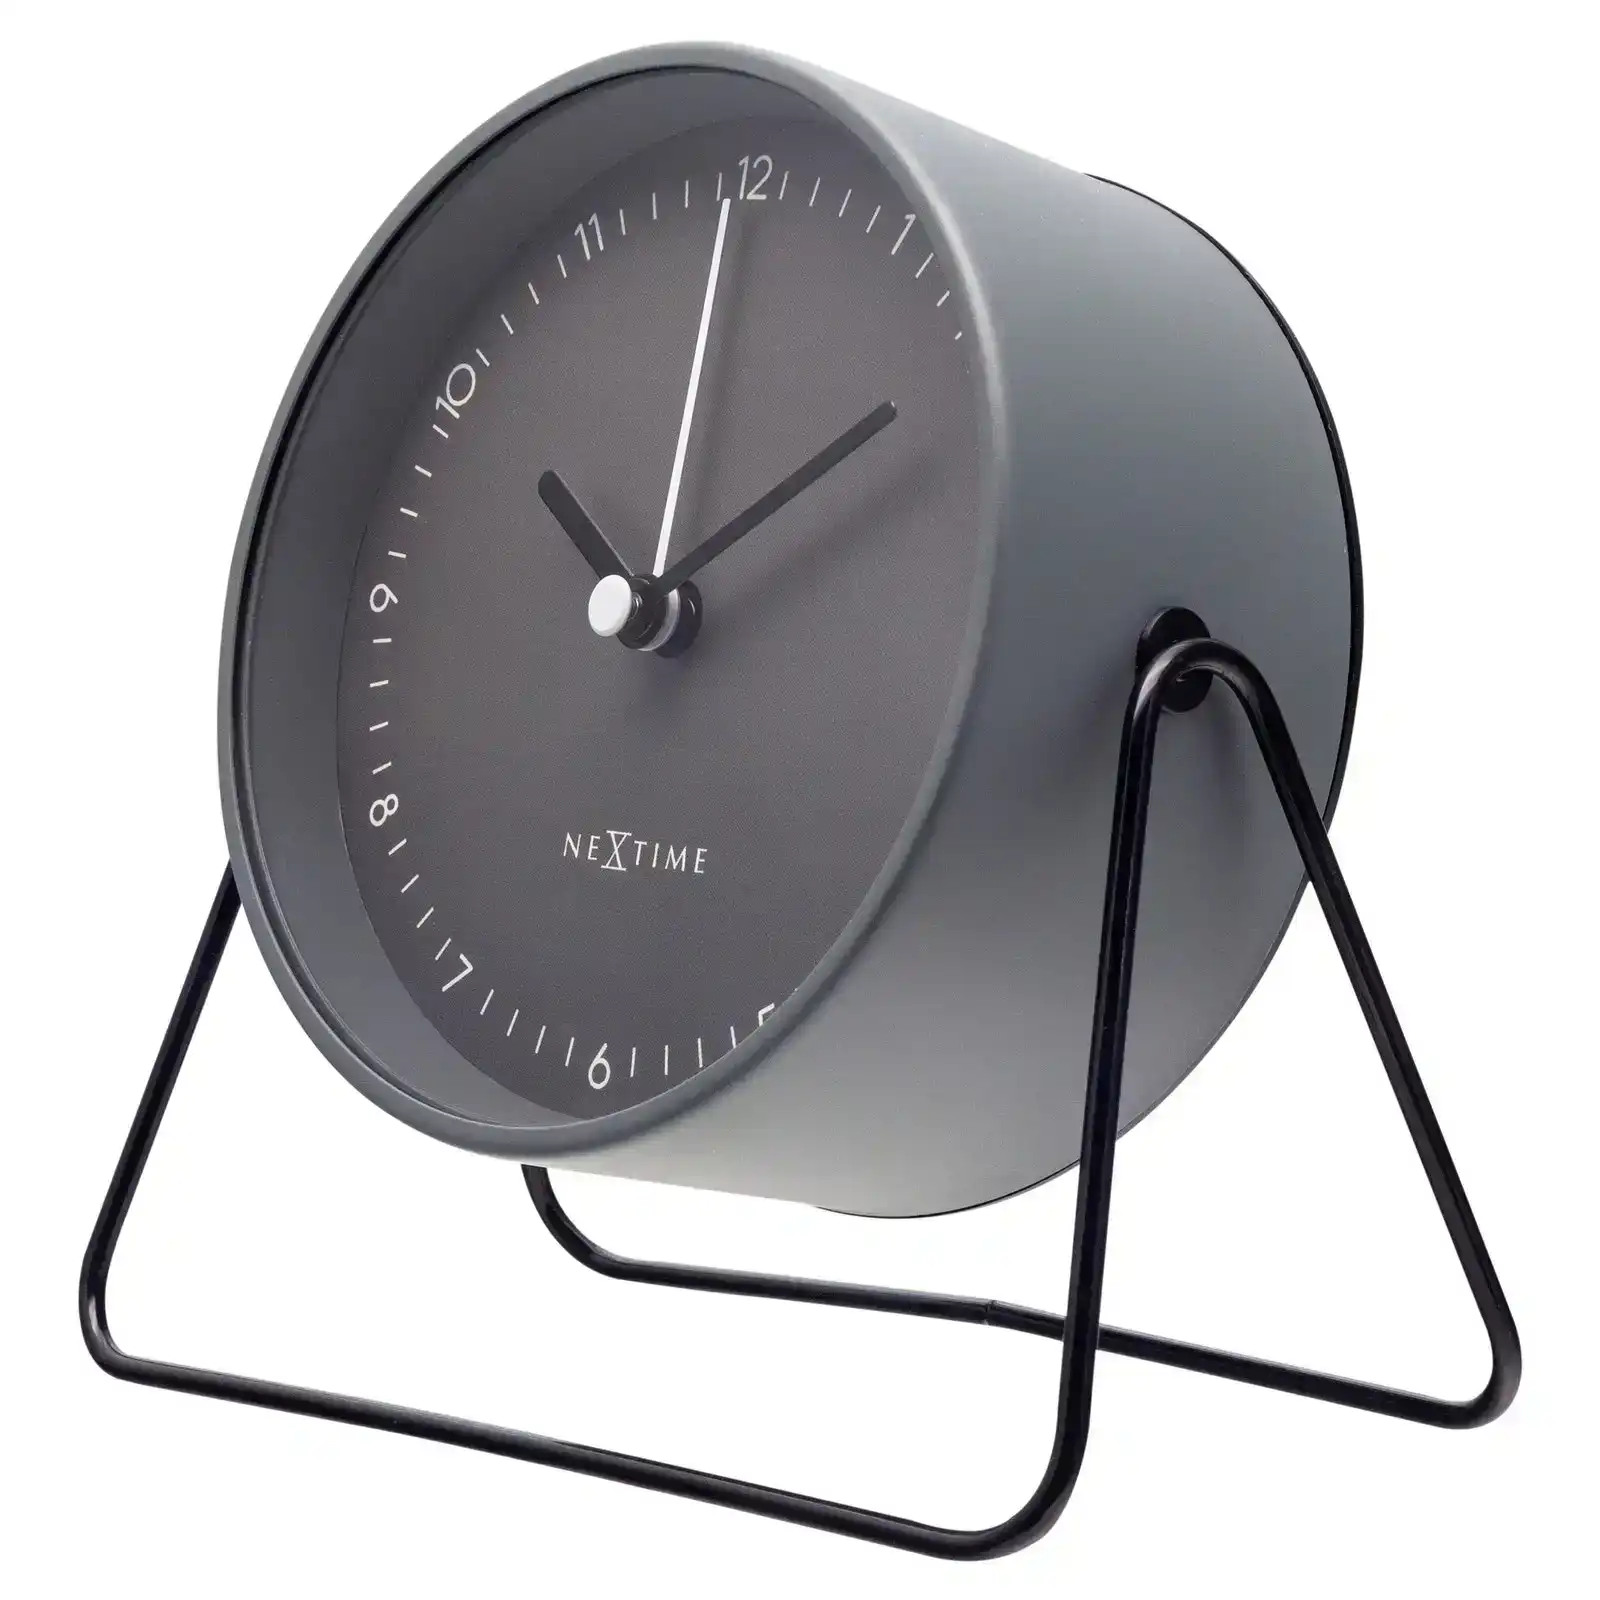 NeXtime Berlin Metal 14x13cm Analogue Table/Desk Alarm Clock w/ Night Light Grey